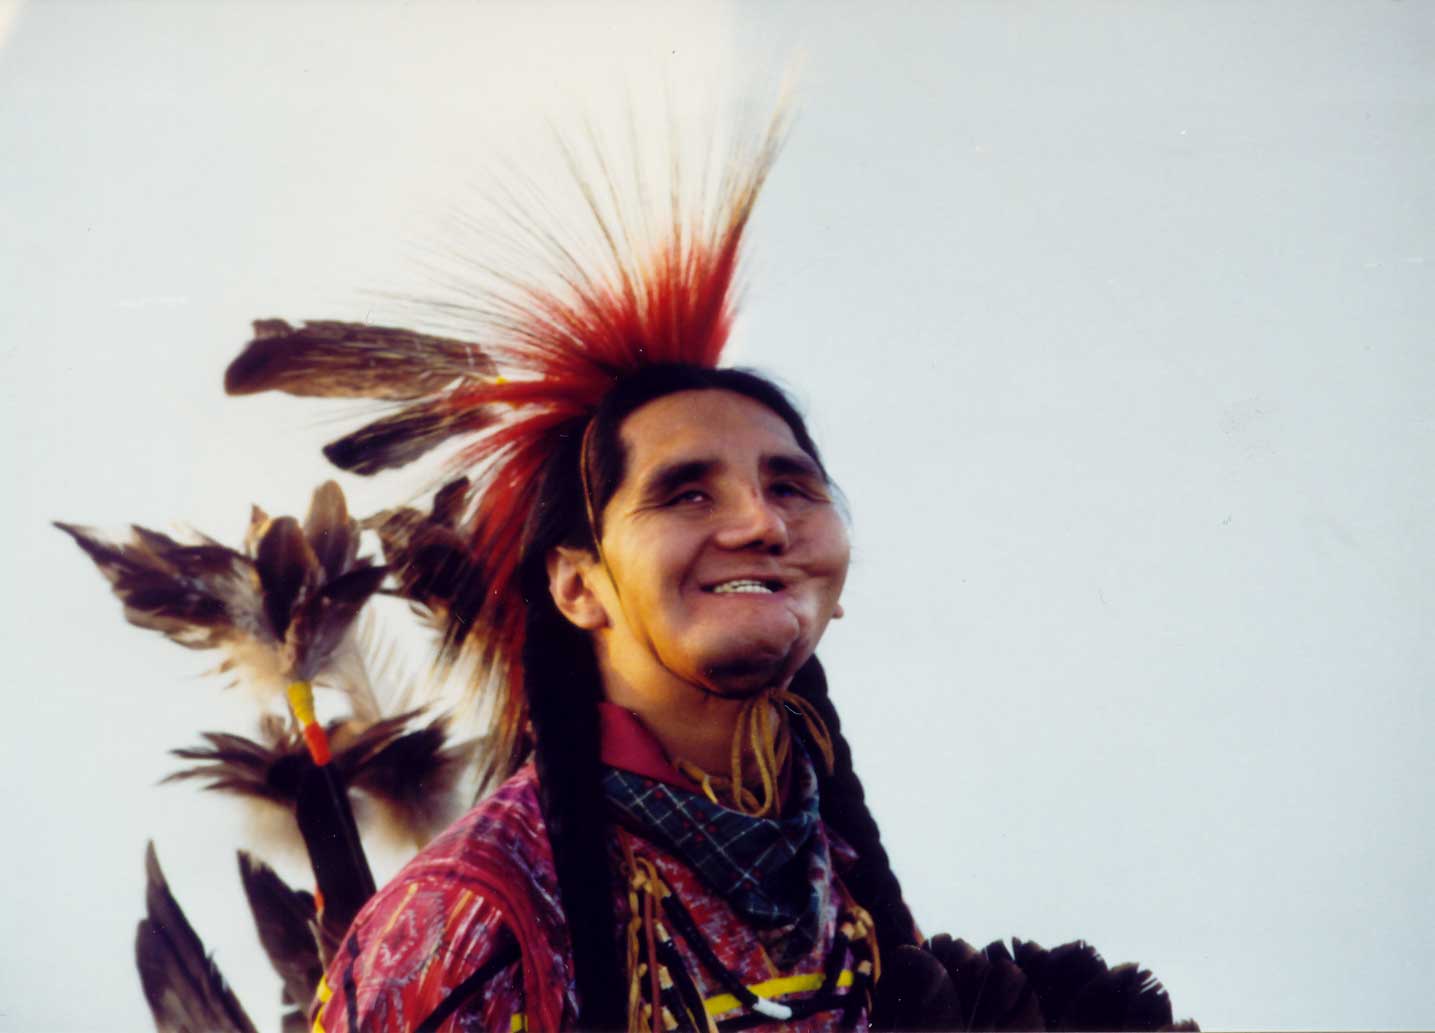 Arnold W. Thomas in native dress.Photo from WhiteBuffaloKnife.com